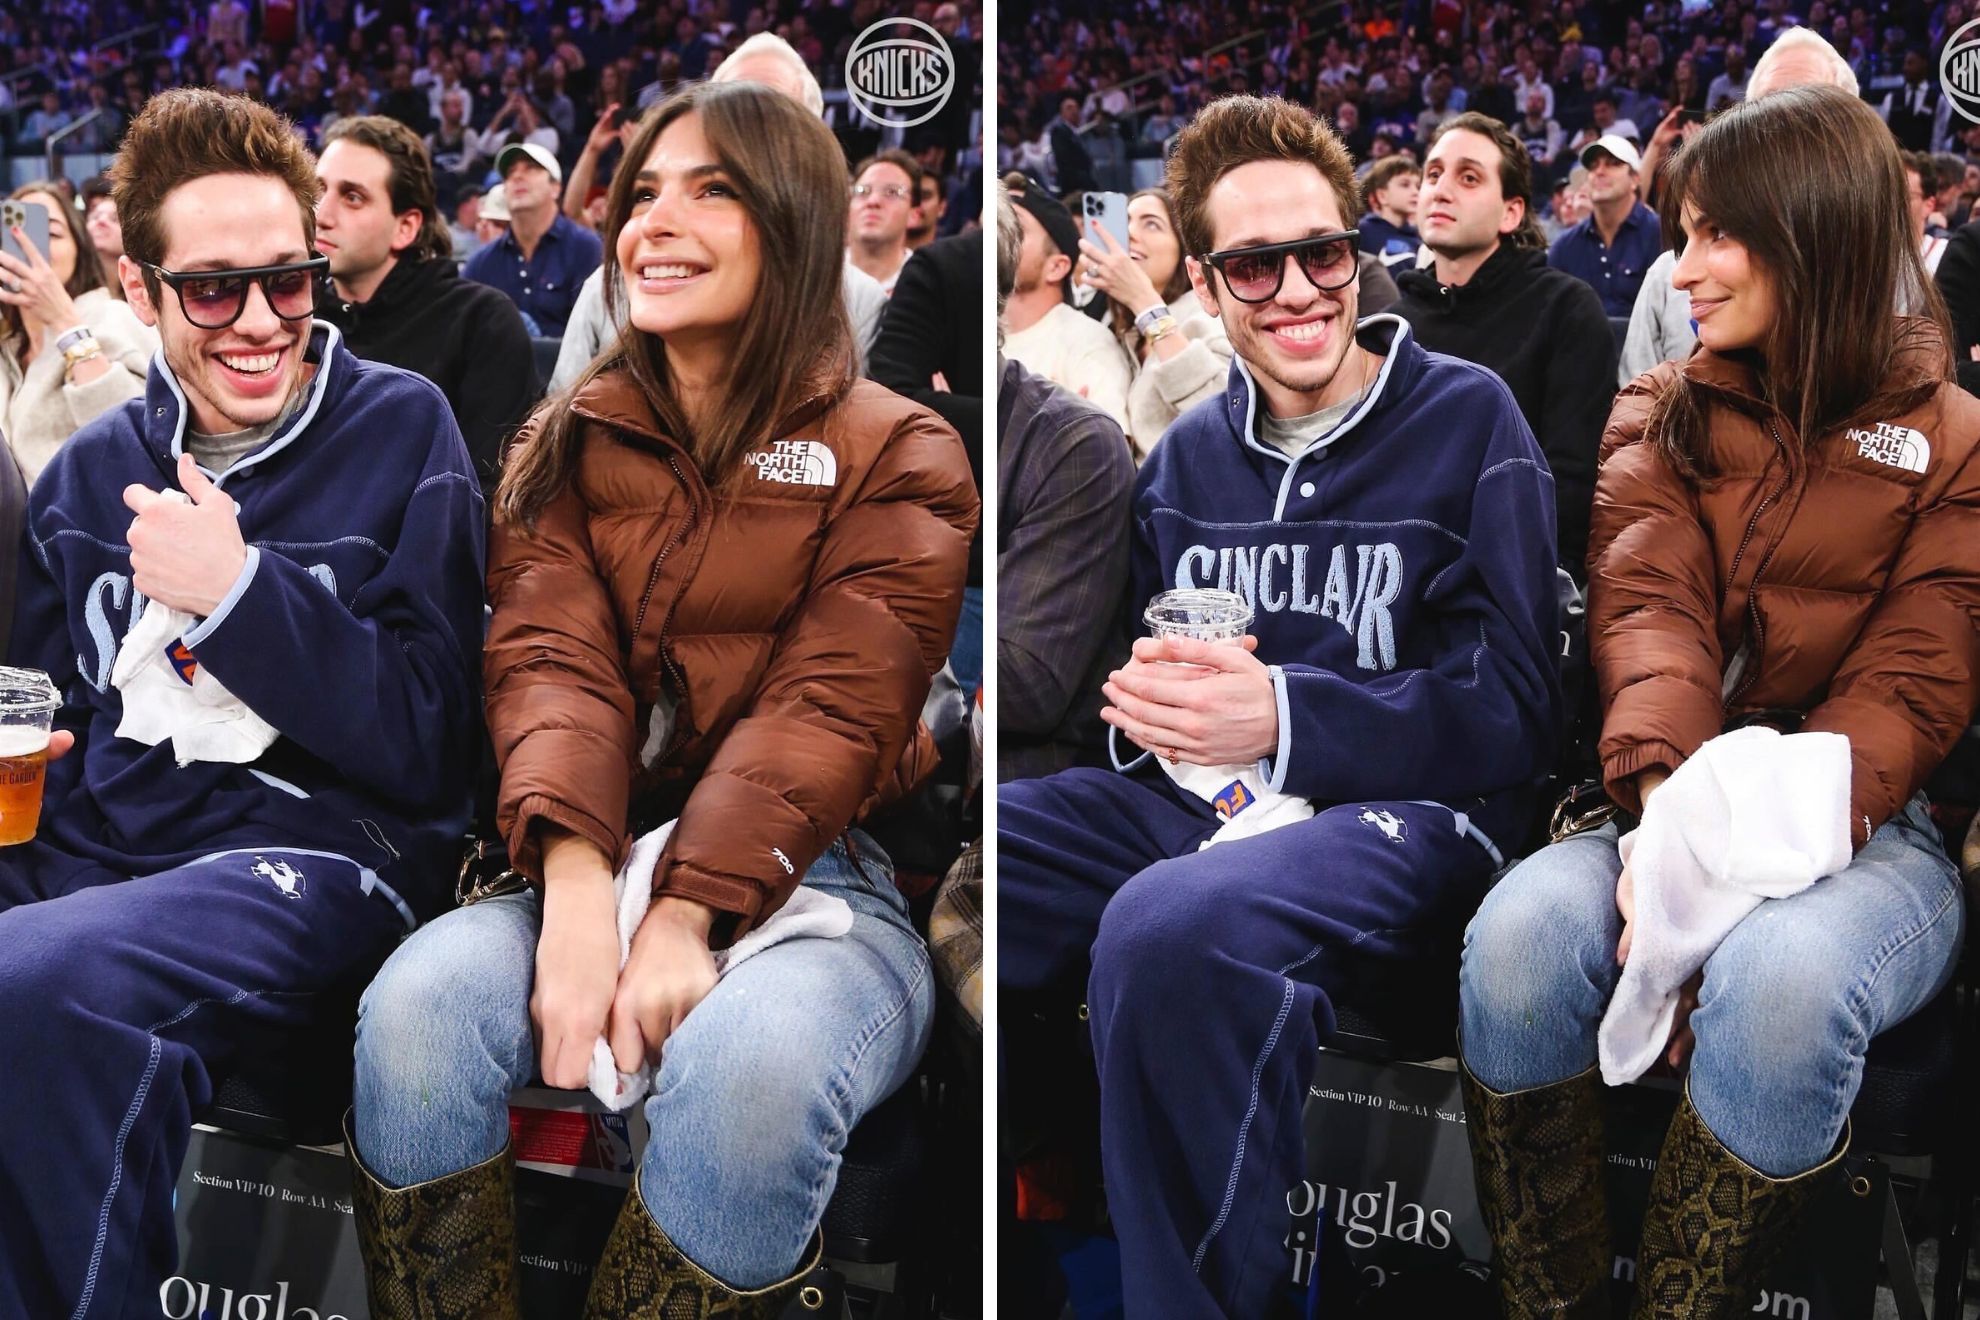 Pete Davidson and Emily Ratajkowski sitting together at Madison Square Garden